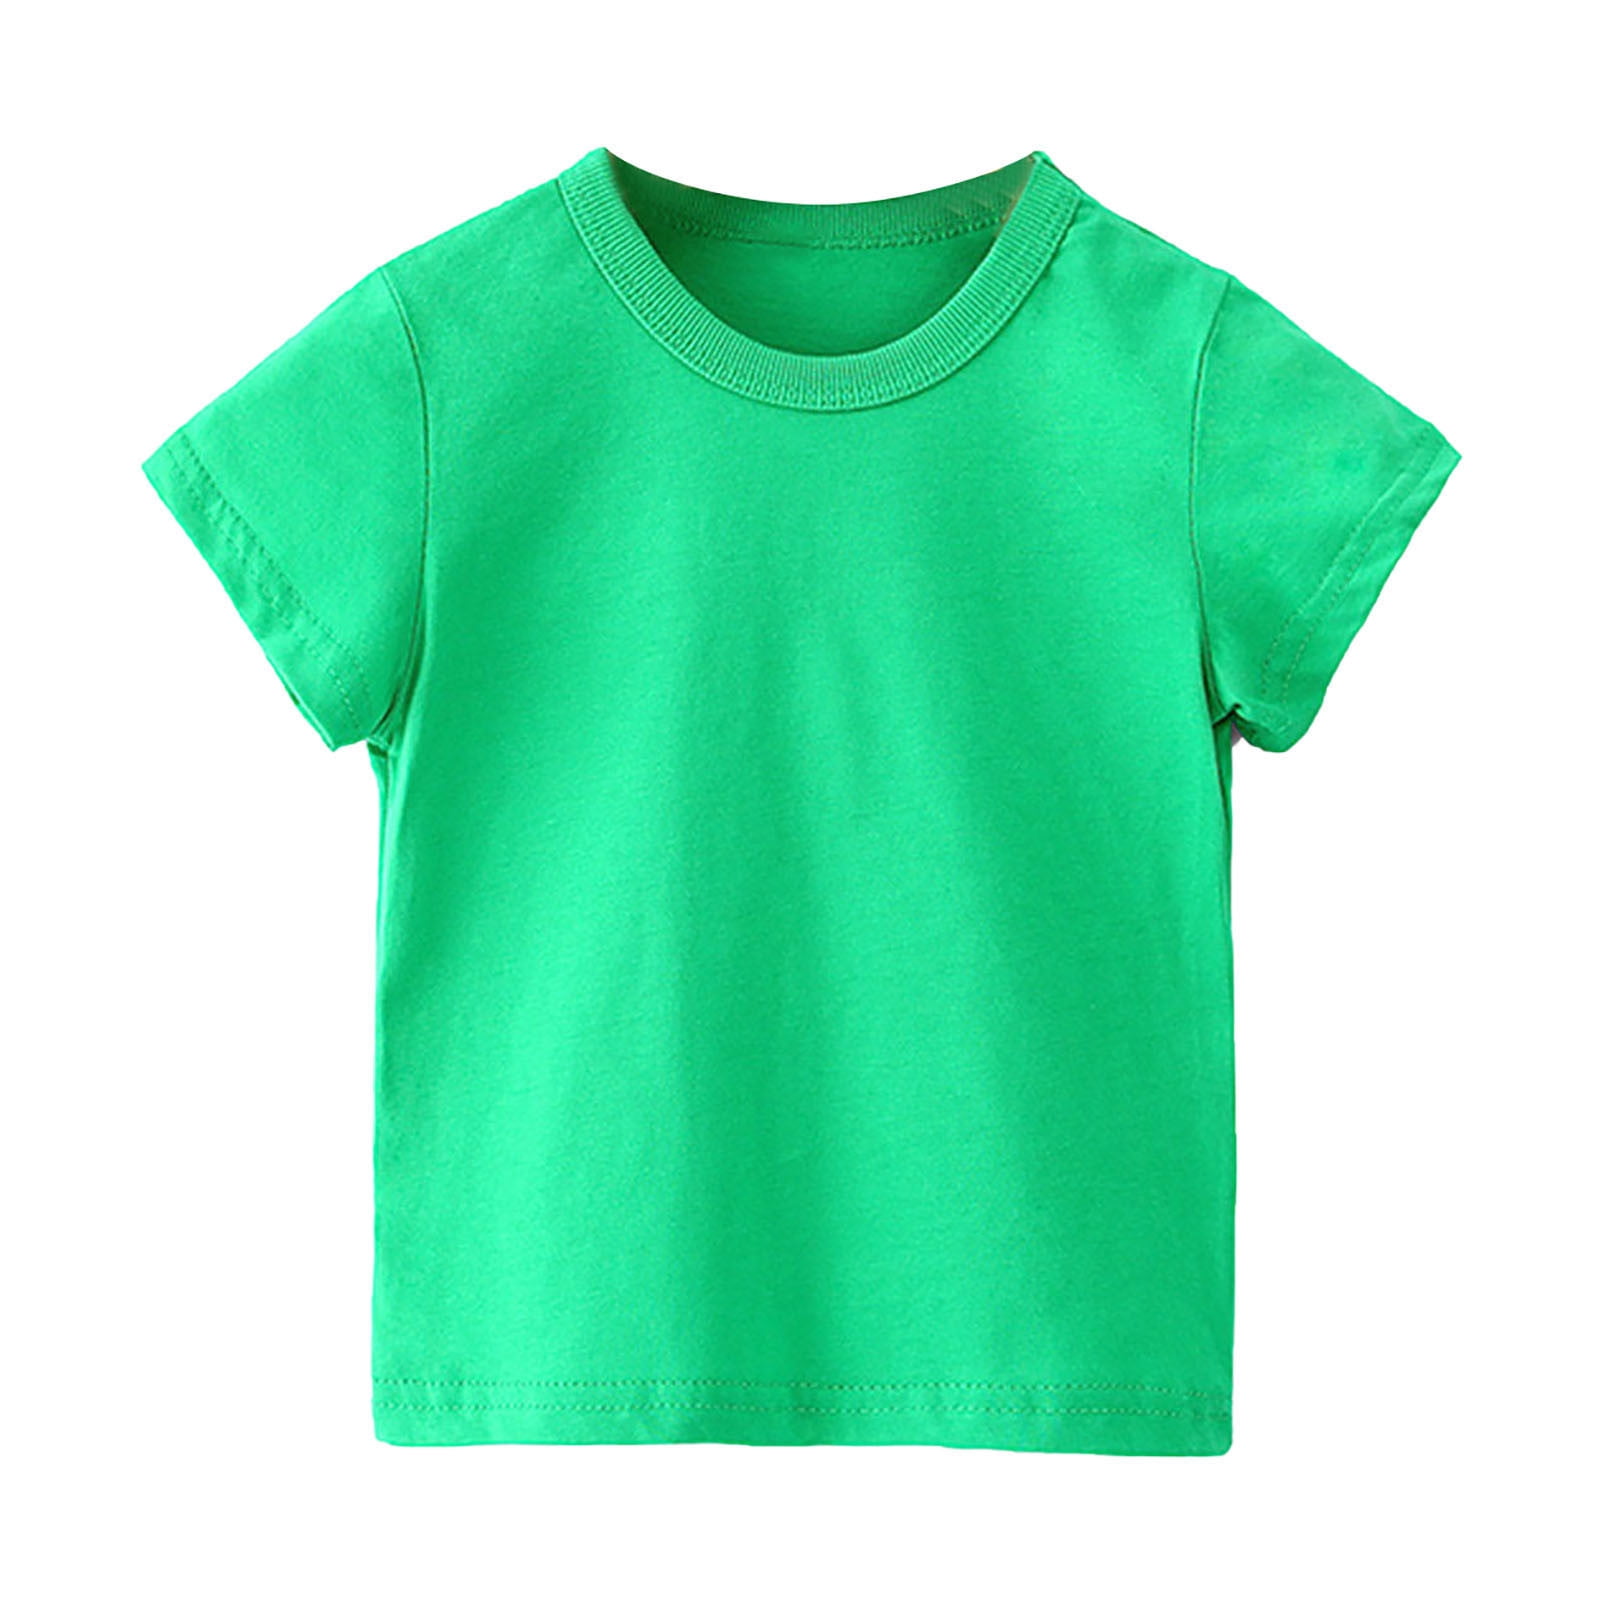 AherBiu Baby Summer Tops Tshirts Short Sleeve Crew Neck Solid Color ...